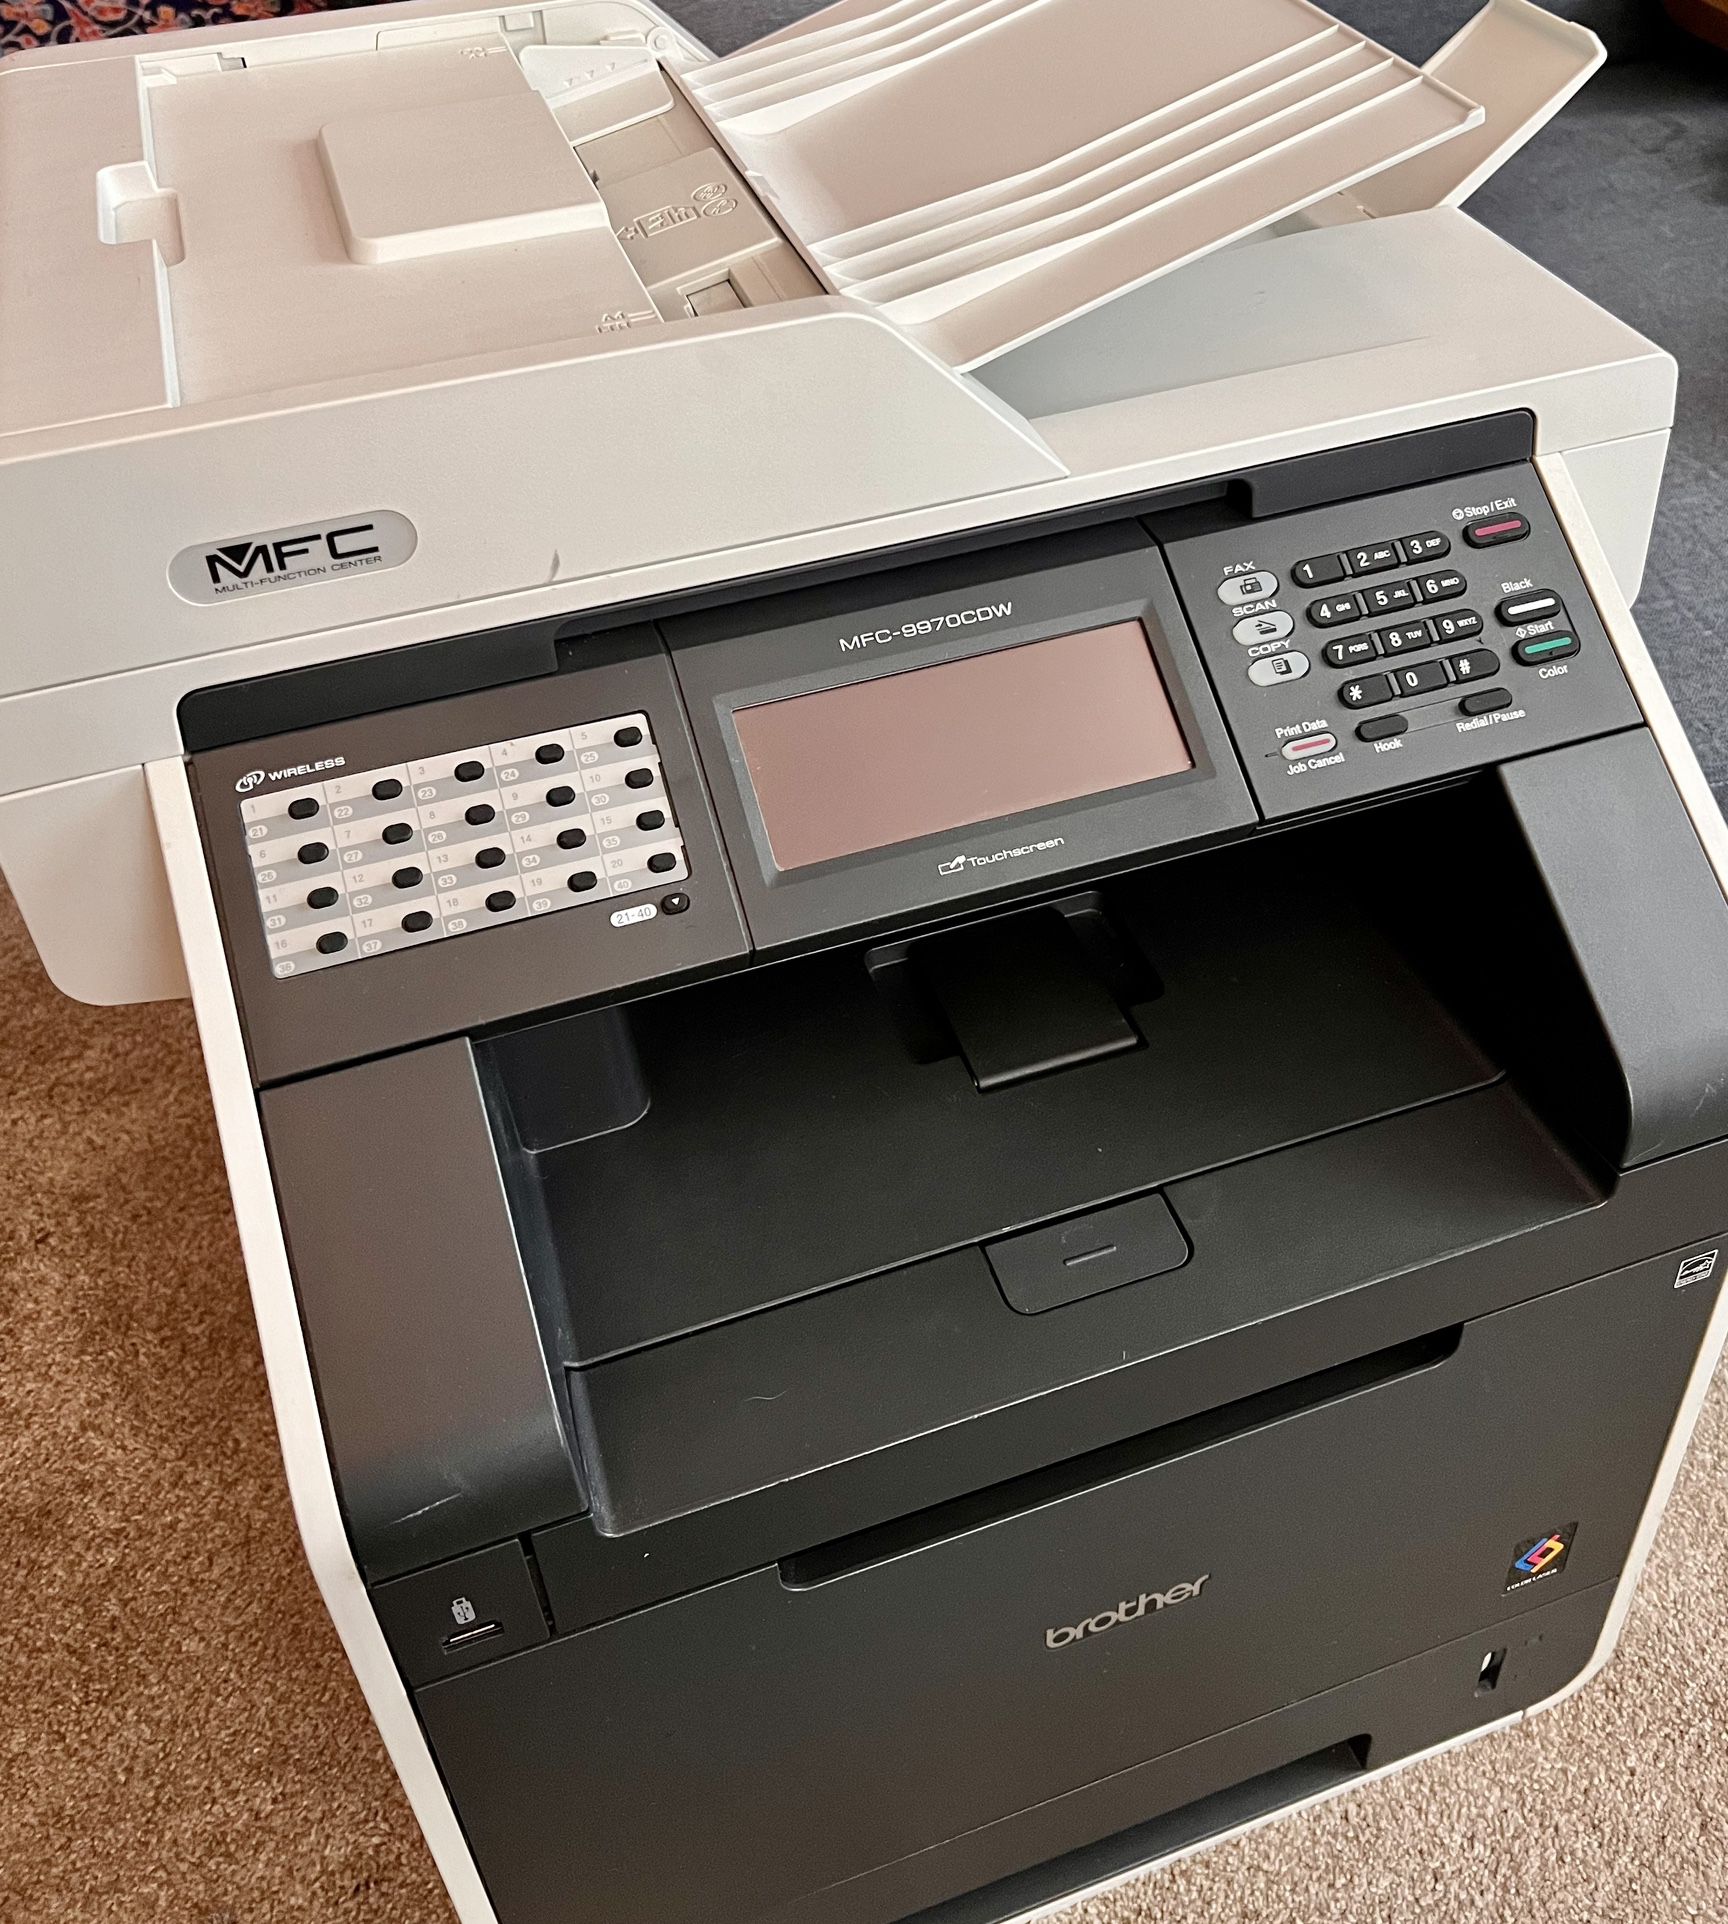 Printer/Fax Machine